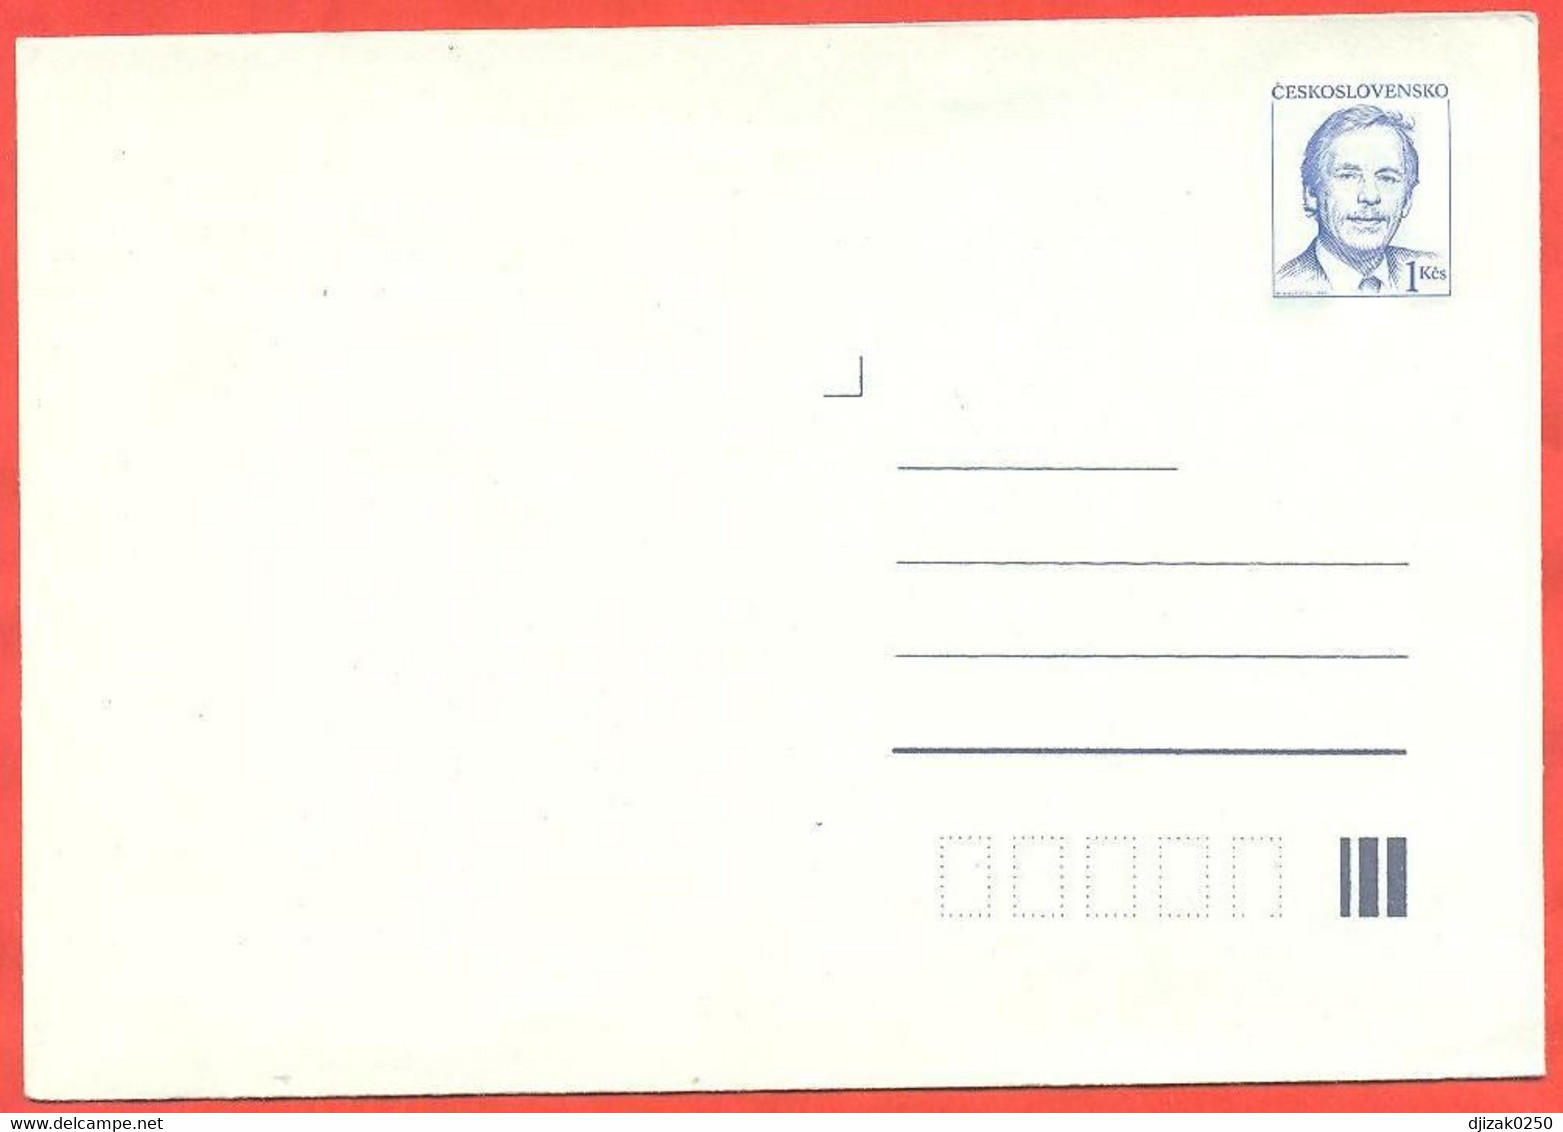 Czechoslovakia 1990. The Envelope With Printed Stamp. Unused. - Enveloppes